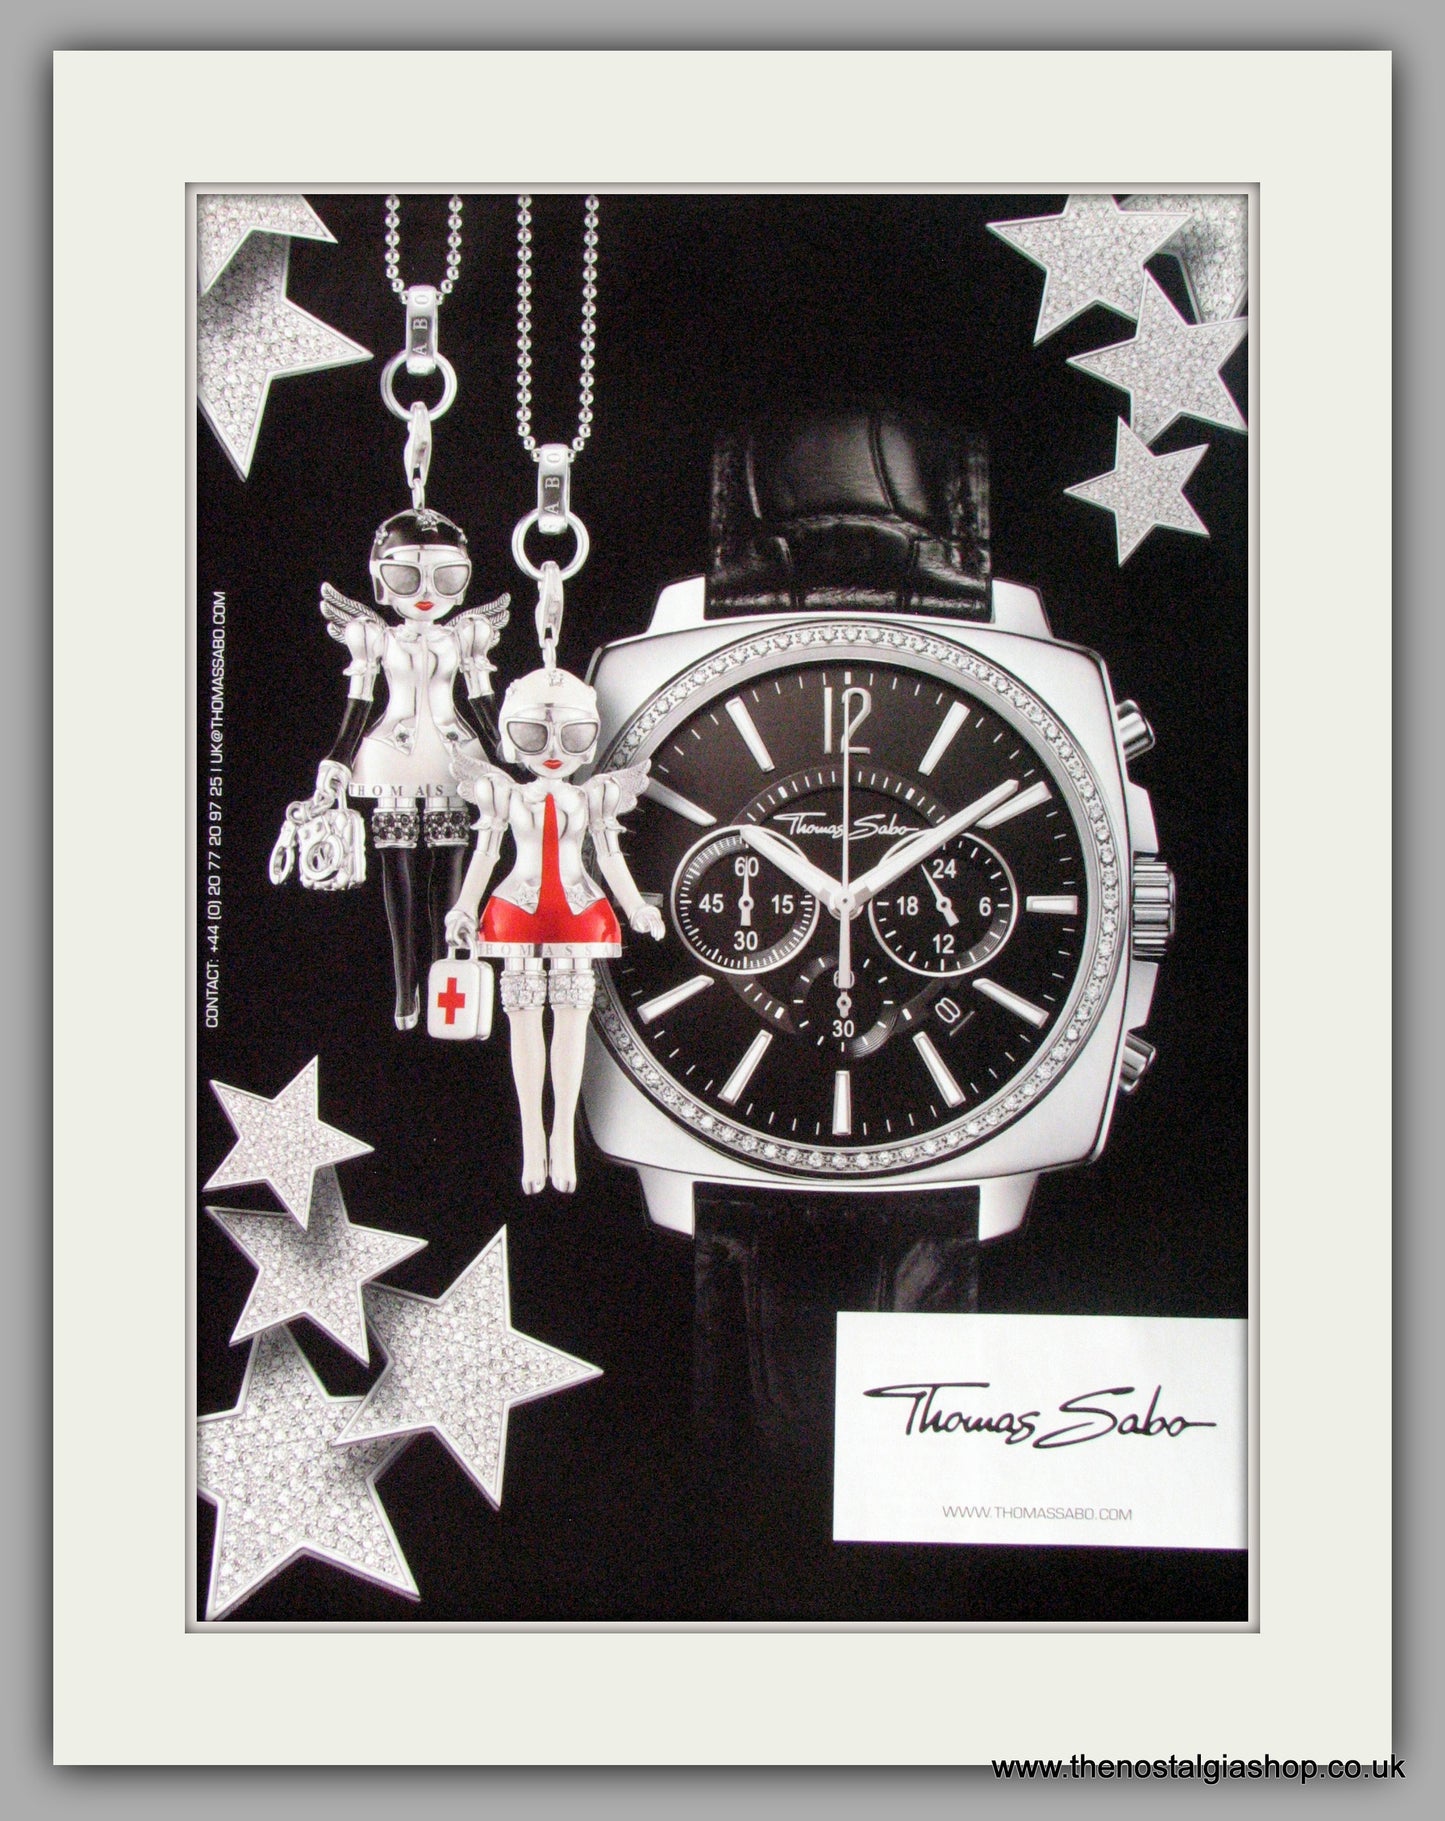 Thomas Sabo Watches. Original Advert 2010 (ref AD50121)